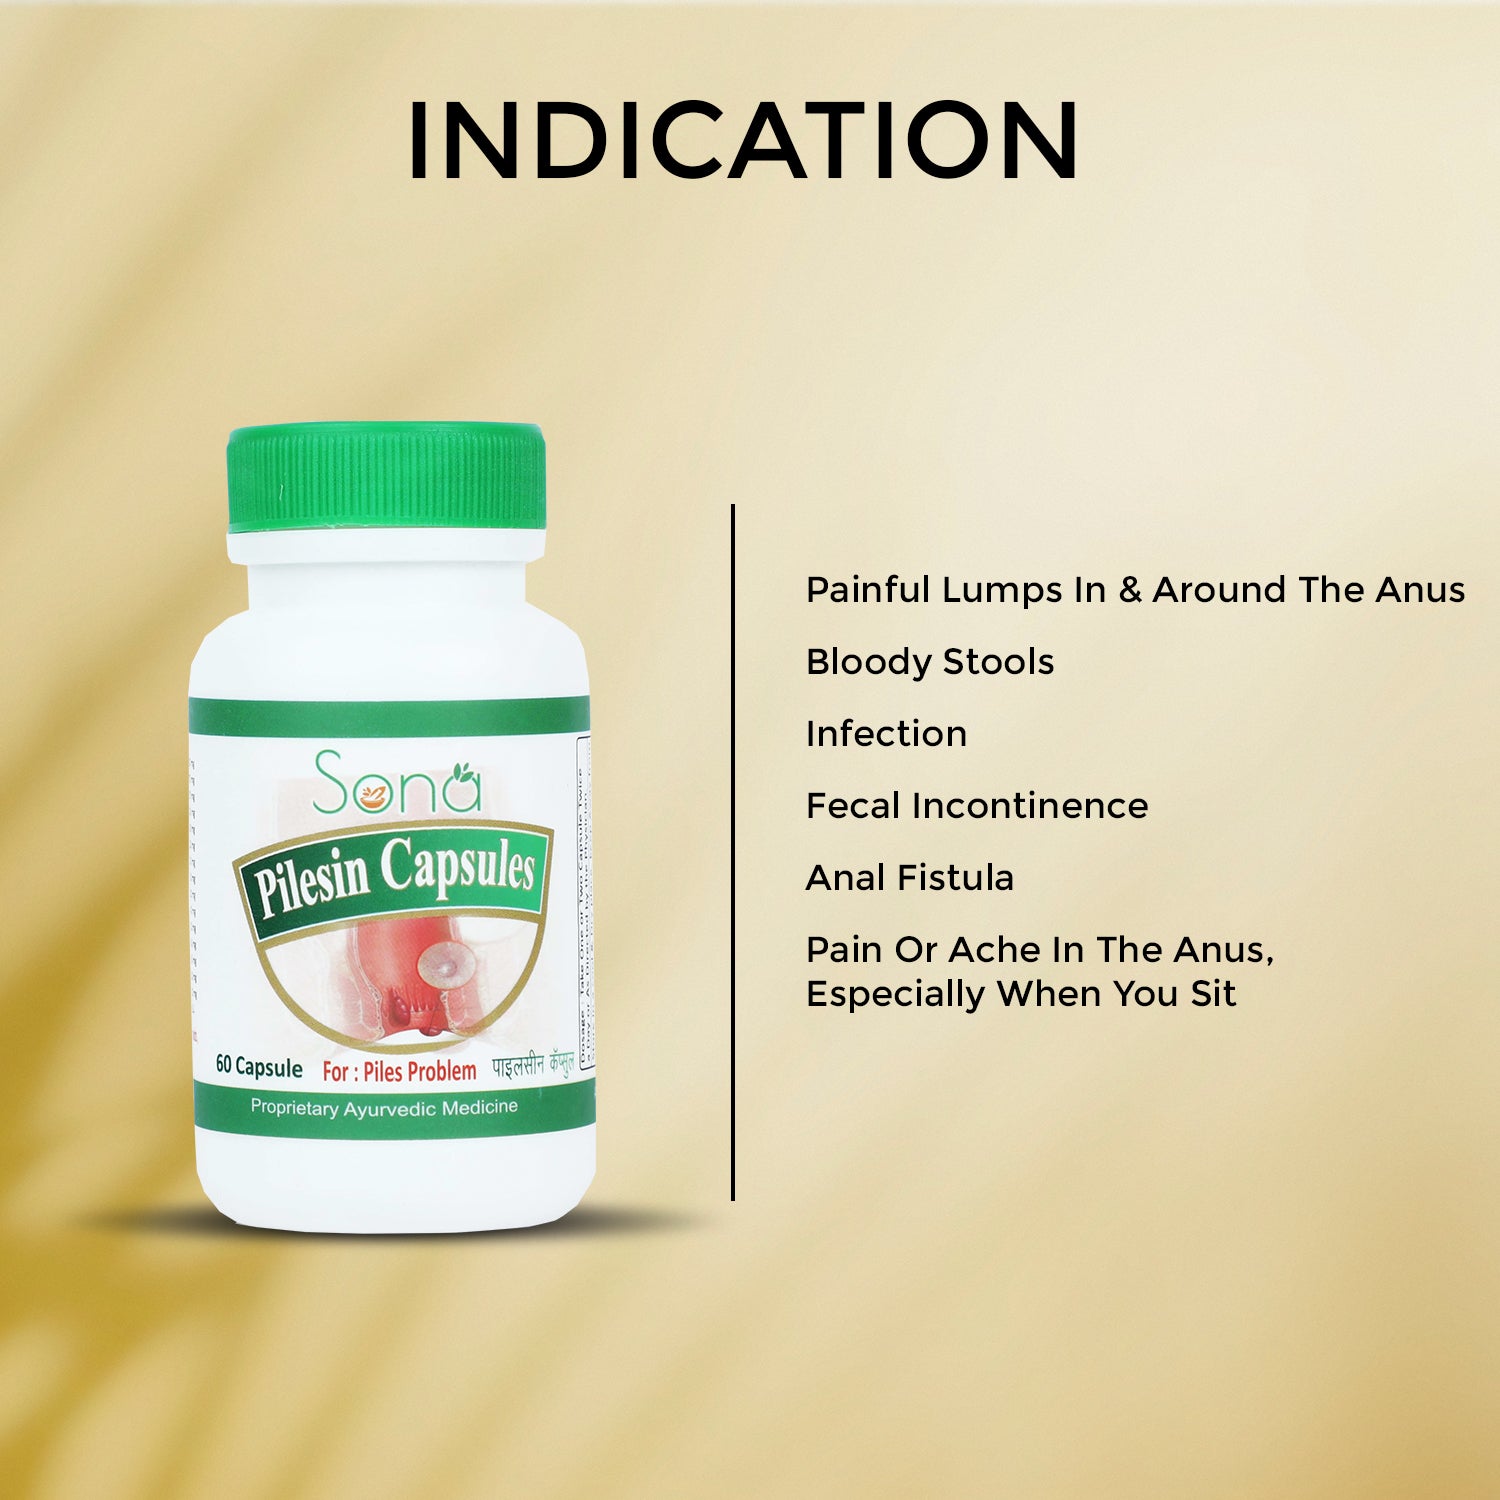 ayurvedic medicine for piles | ayurvedic treatment for piles | best medicine for piles | piles treatement medicine | piles medicine